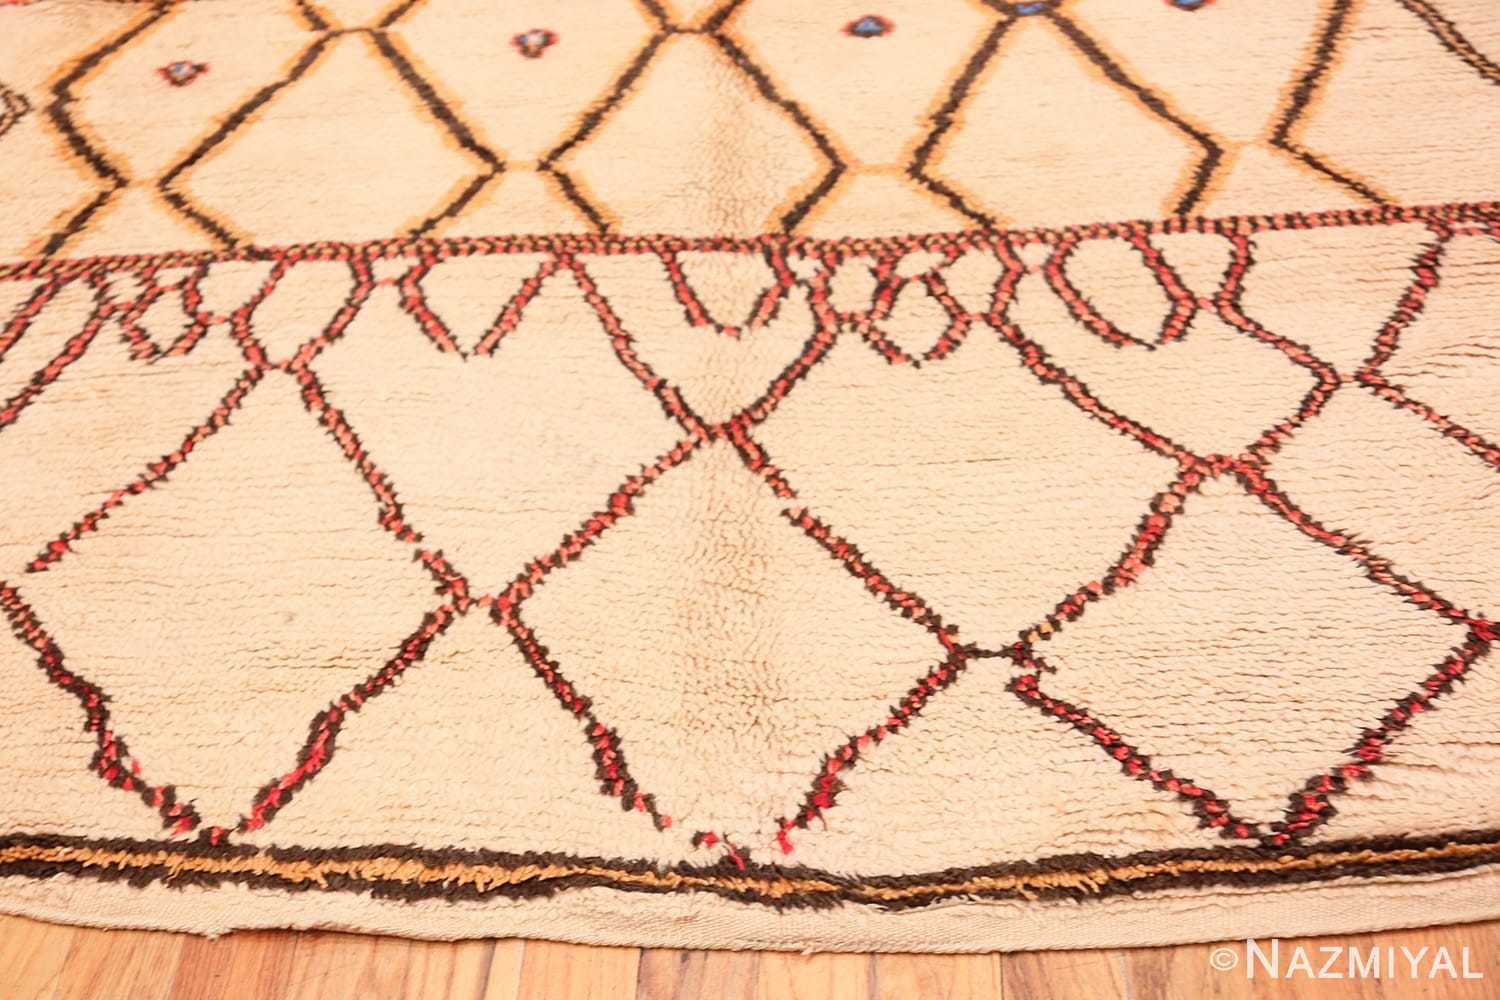 Border Folk Art Mid Century Vintage Tribal Moroccan rug 48354 by Nazmiyal